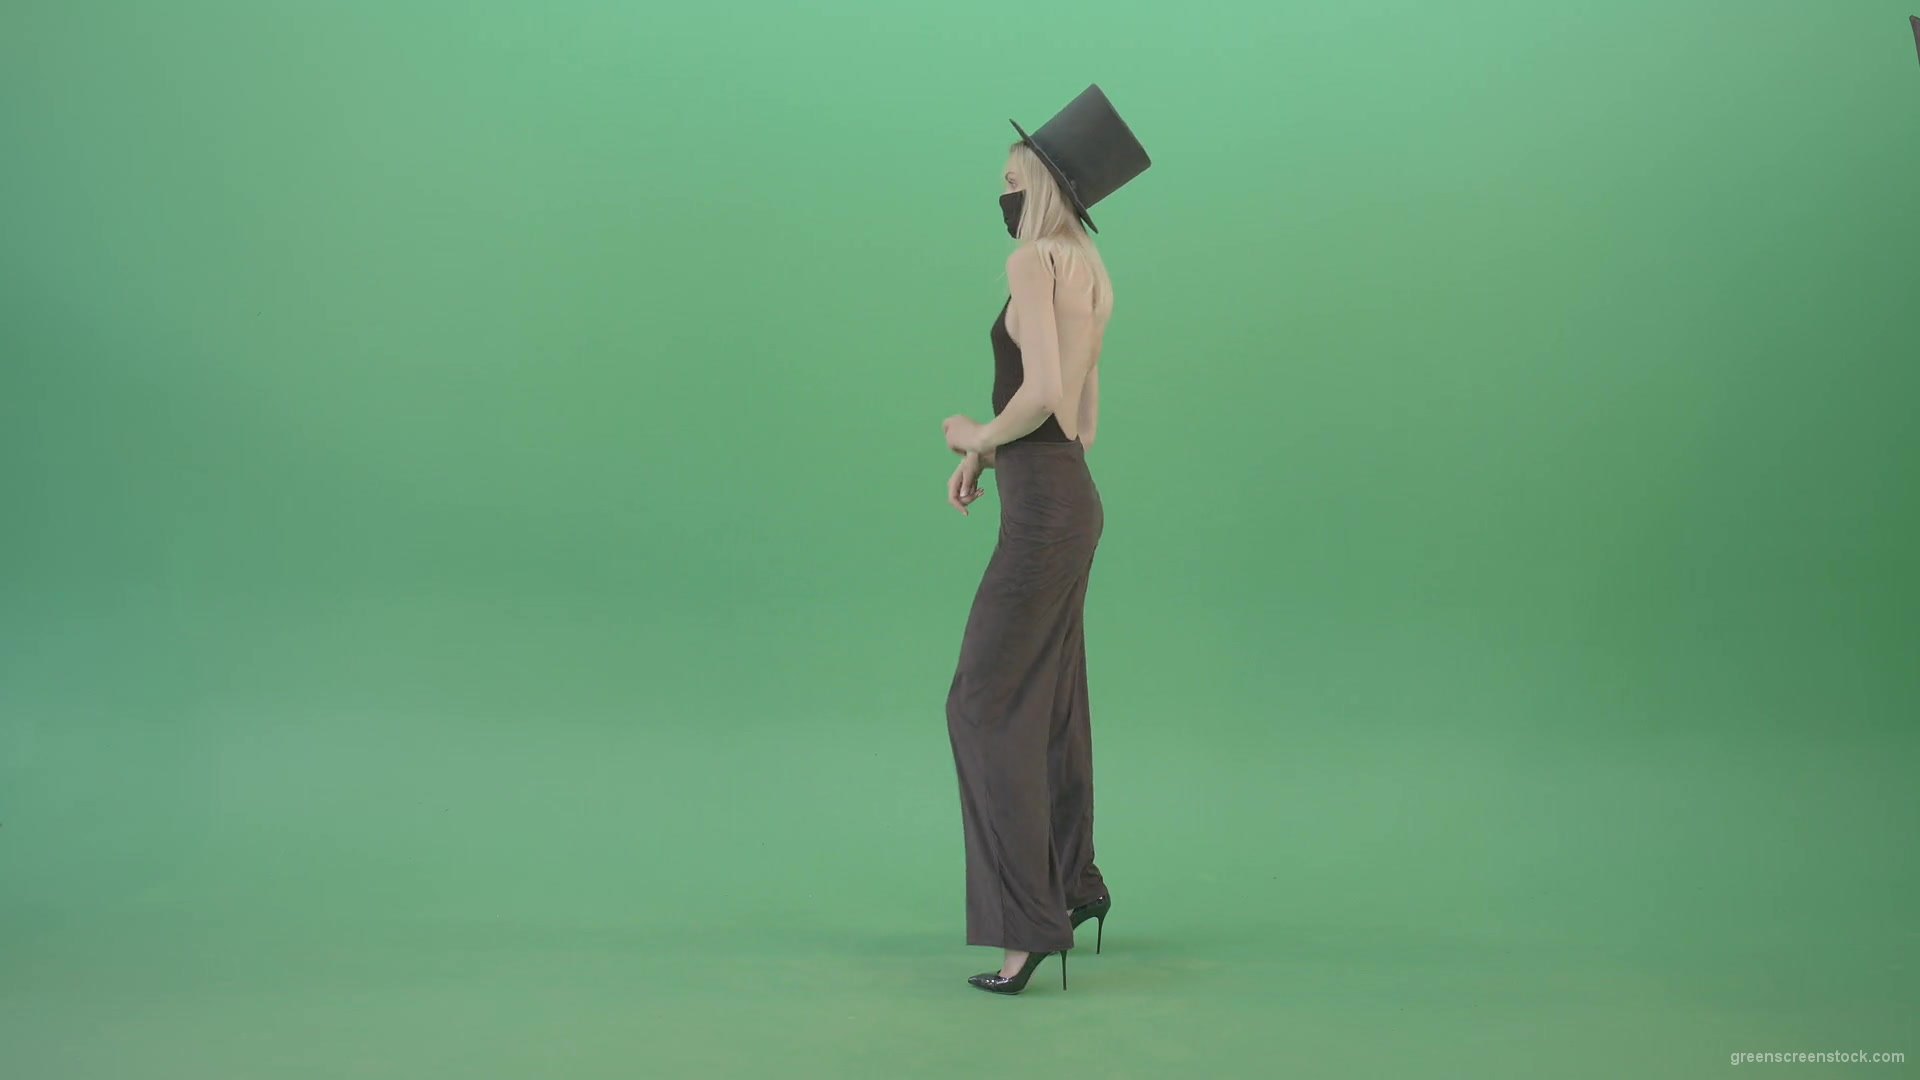 Blonde-Girl-in-Black-Cylinder-Hat-dancing-slowly-in-Corona-VIrus-Mask-on-green-screen-VIdeo-Footage-1920_008 Green Screen Stock